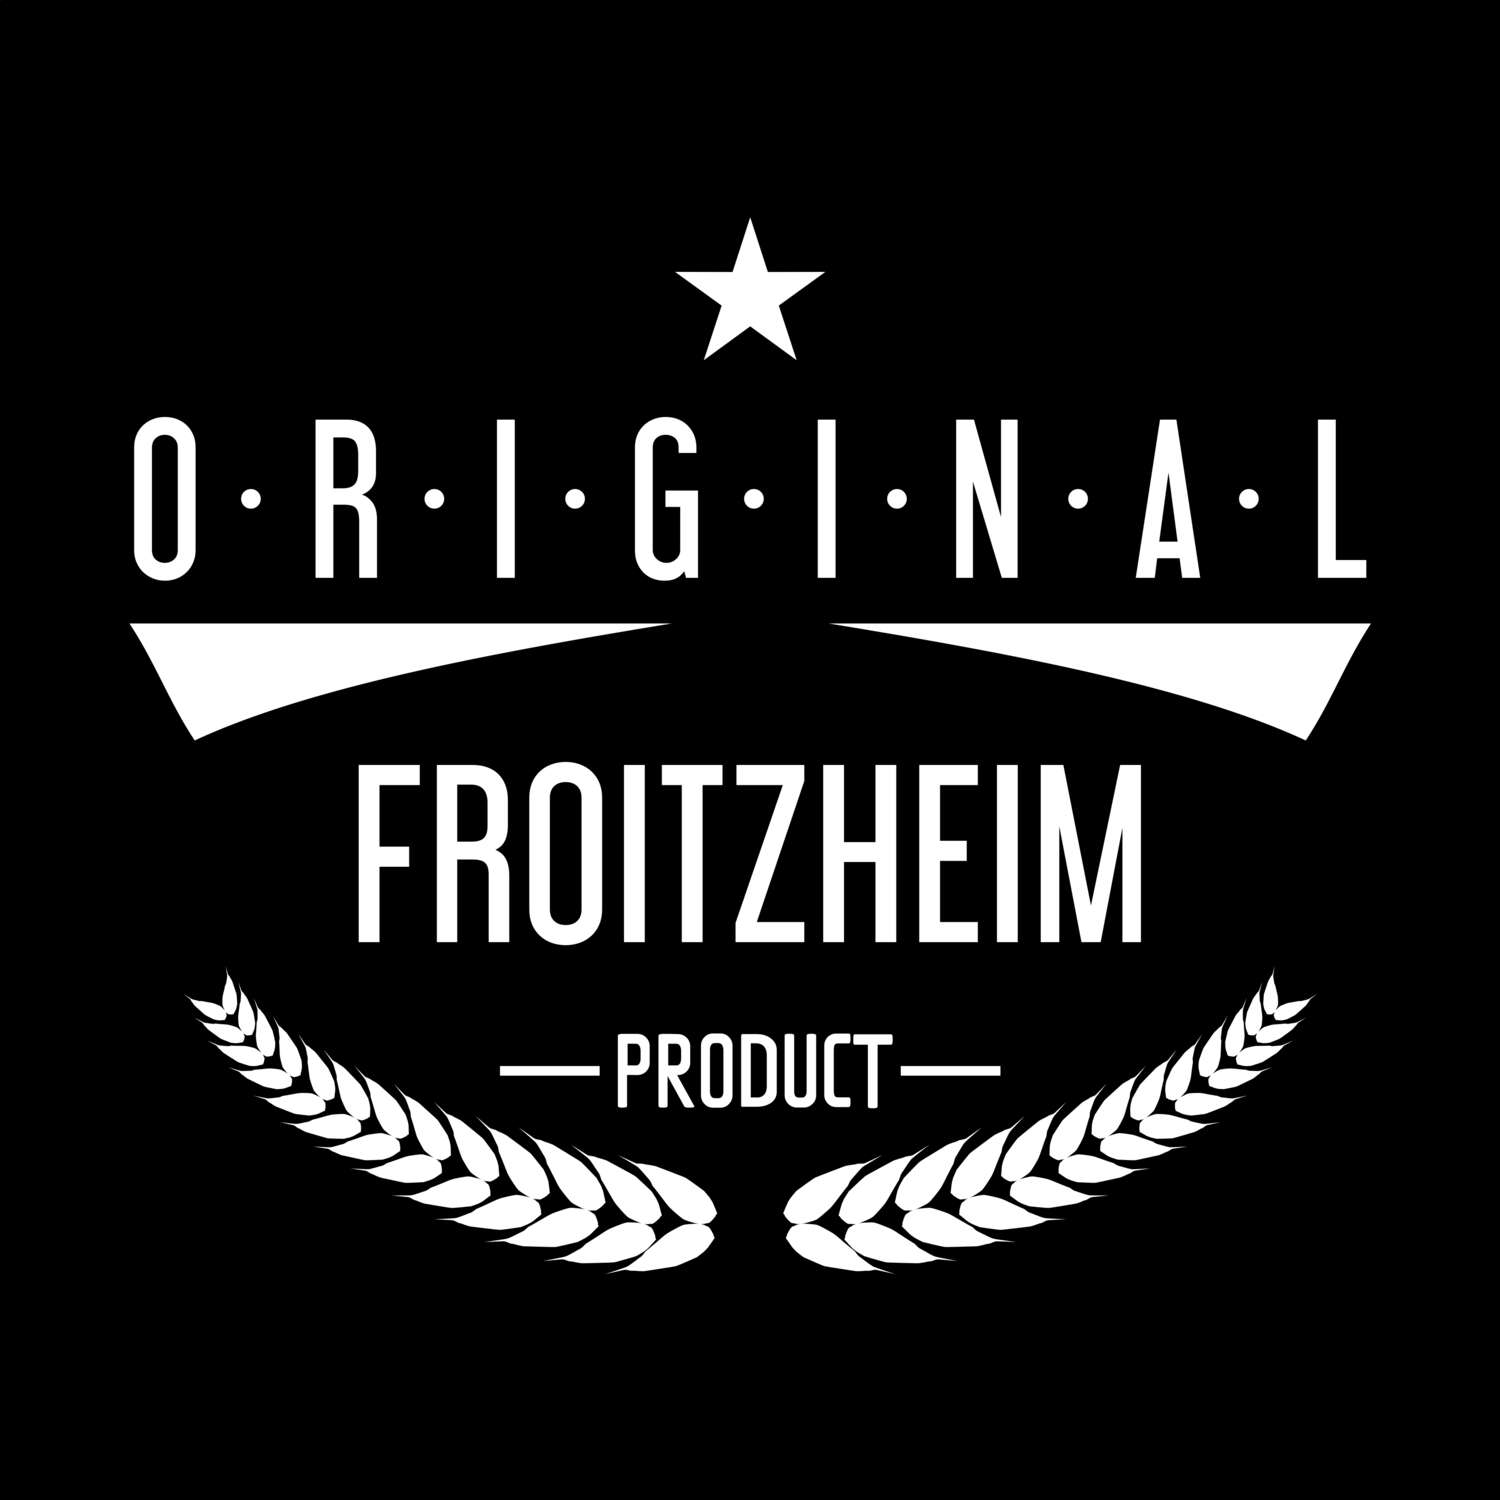 Froitzheim T-Shirt »Original Product«